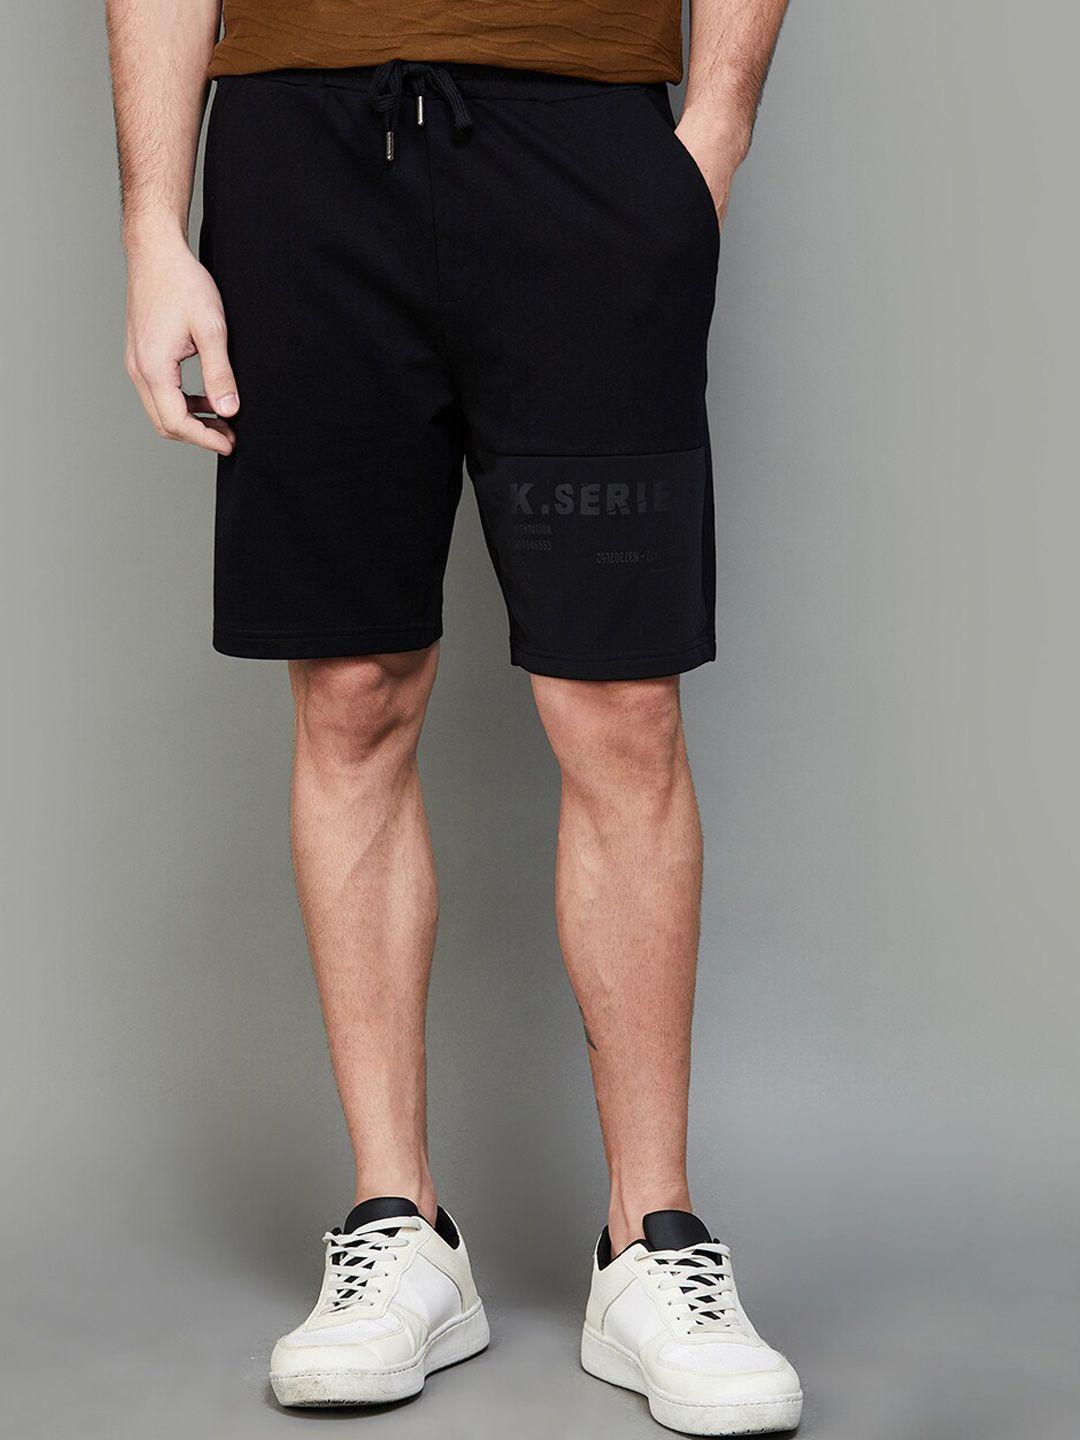 bossini men mid-rise regular shorts